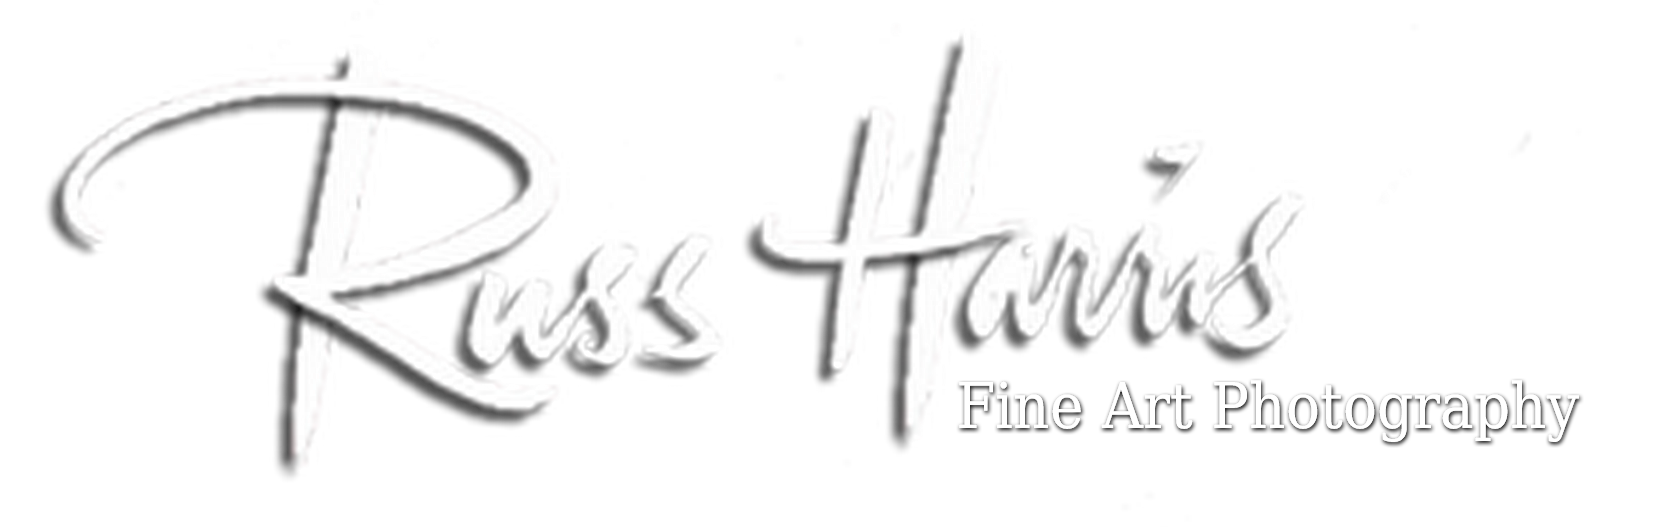 Russ Harris Fine Art & Photography Logo